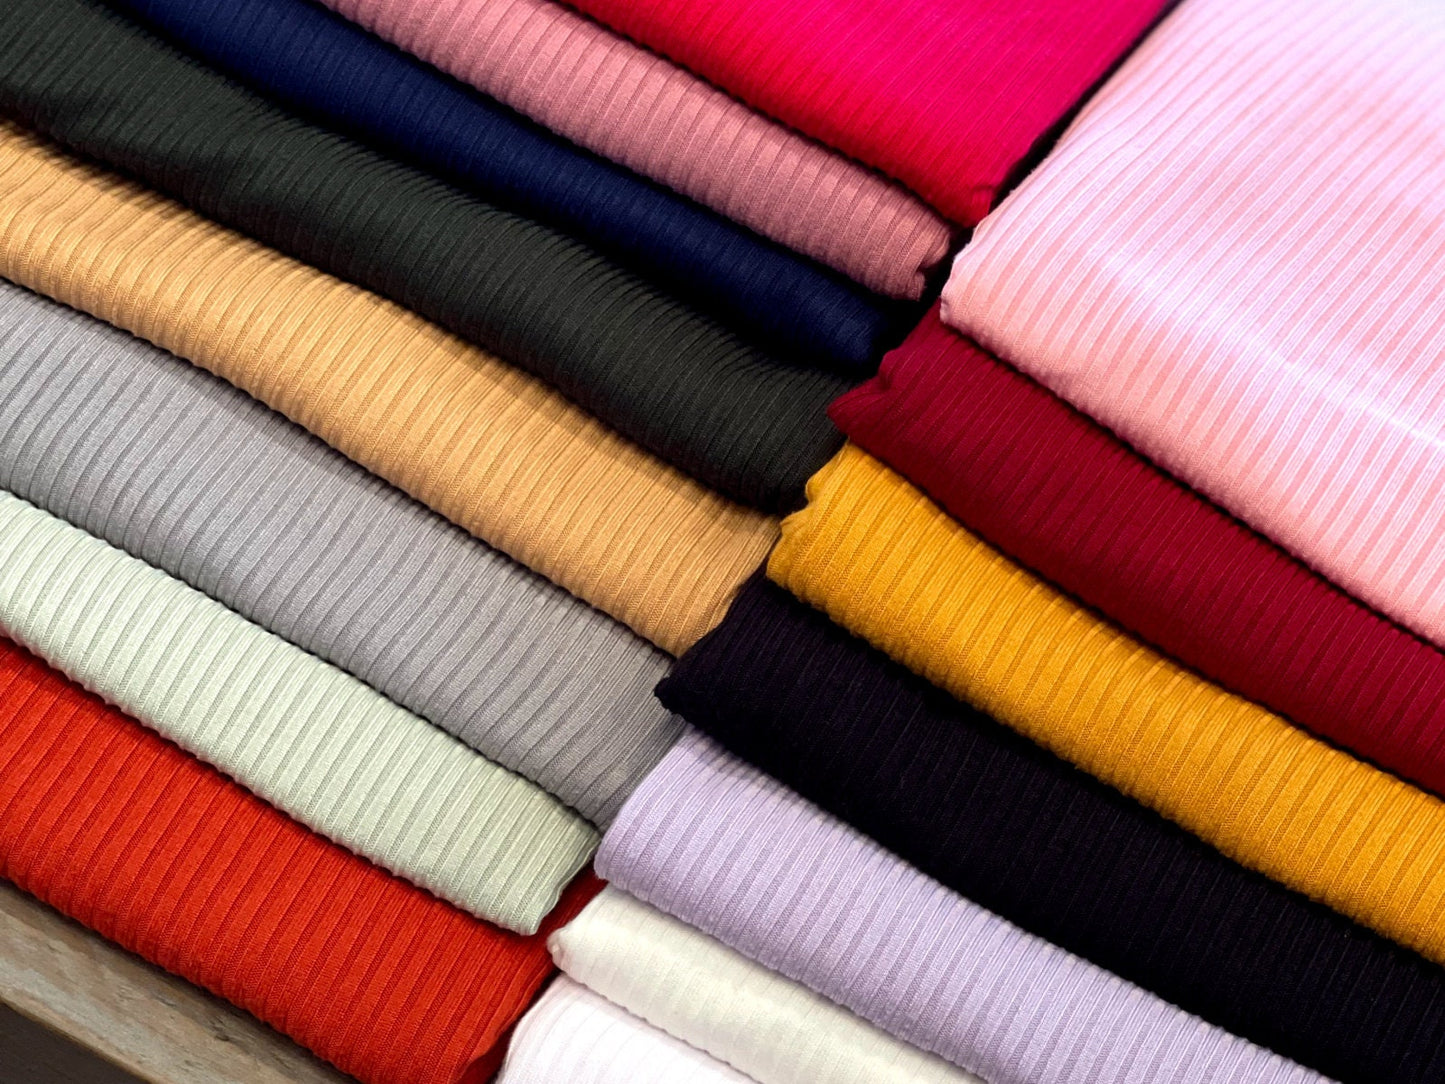 Black Rib Knit Fabric by the Yard Ribbed Jersey Stretchy Soft Polyester Stretch Fabric 1 Yard